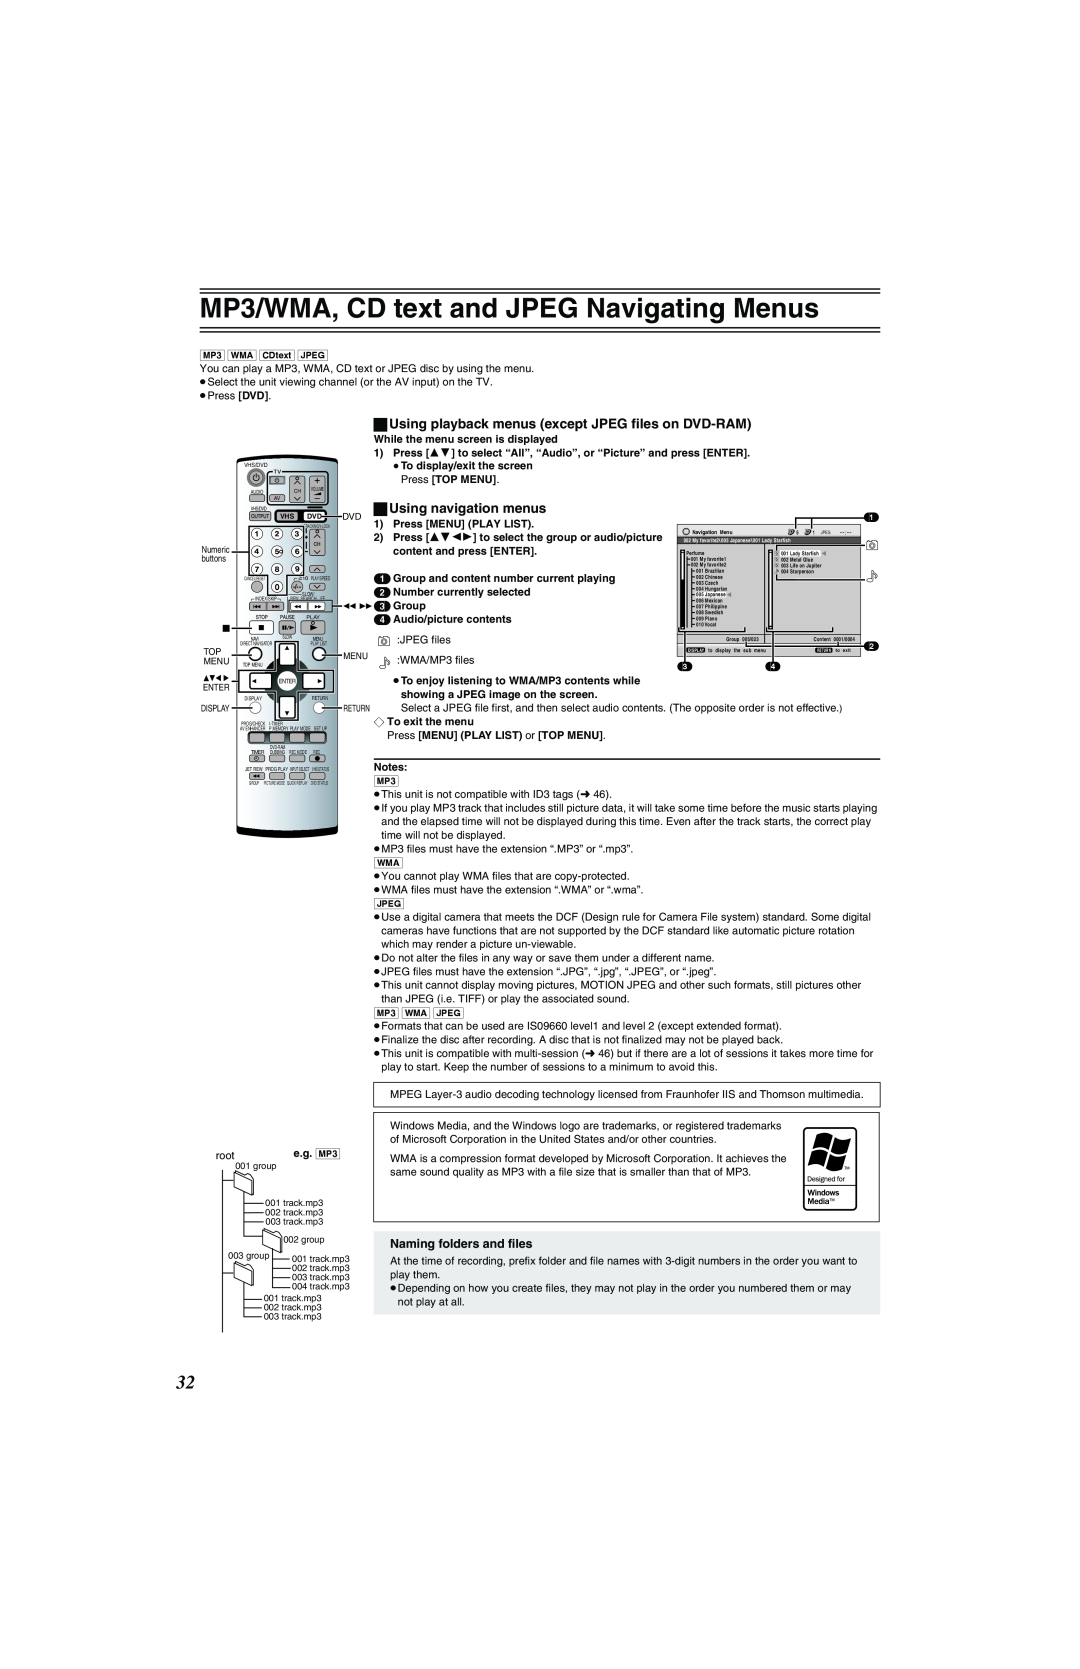 Panasonic NV-VP32 Series MP3/WMA, CD text and JPEG Navigating Menus, ª Using playback menus except JPEG files on DVD-RAM 